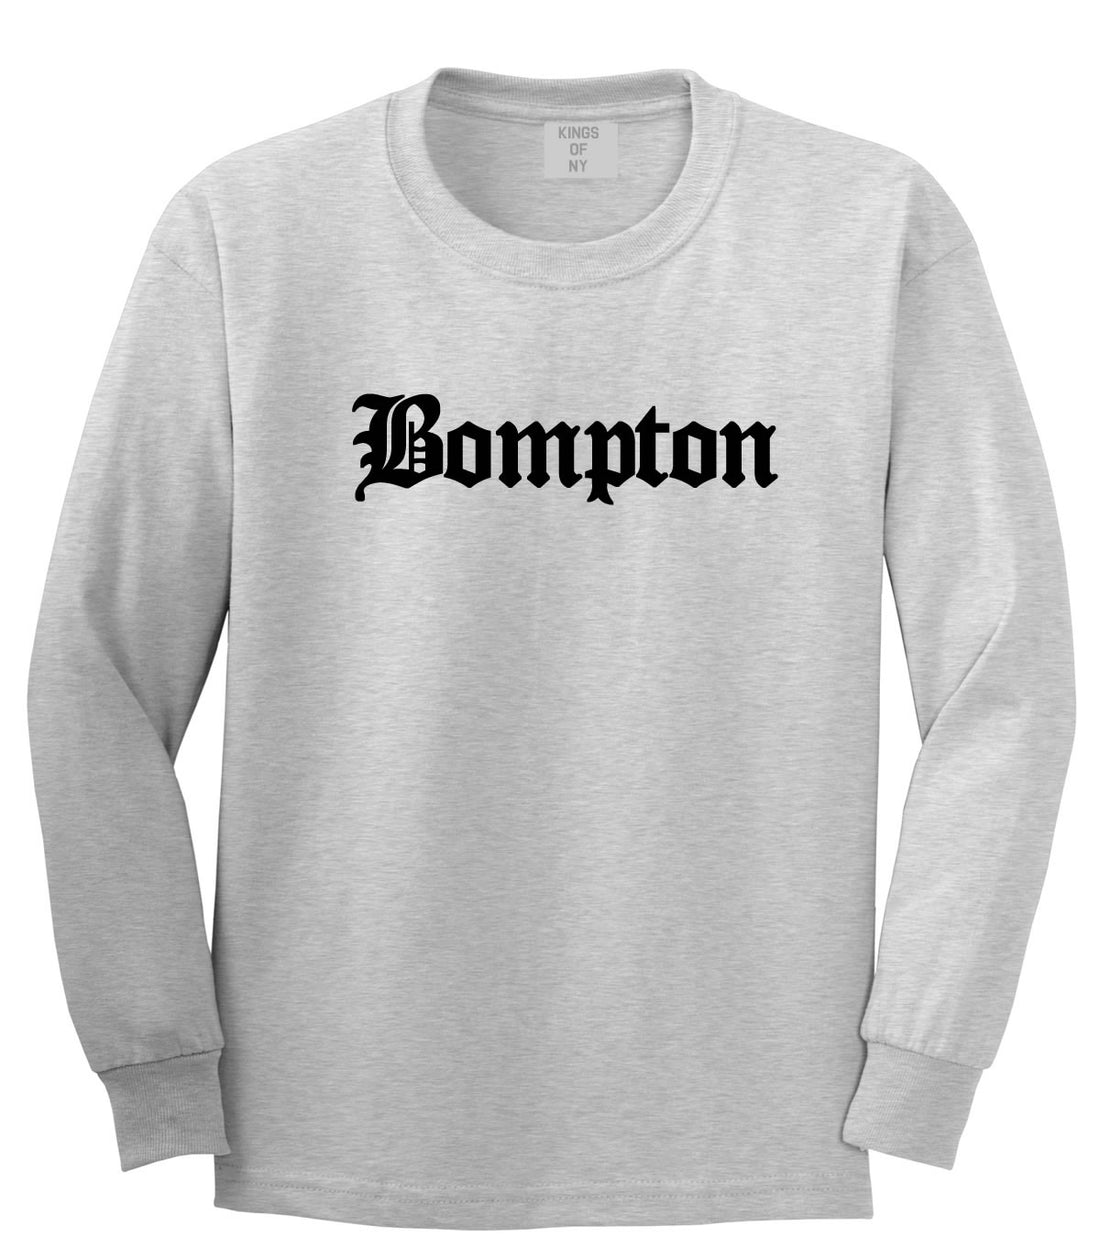 Bompton Long Sleeve T-Shirt